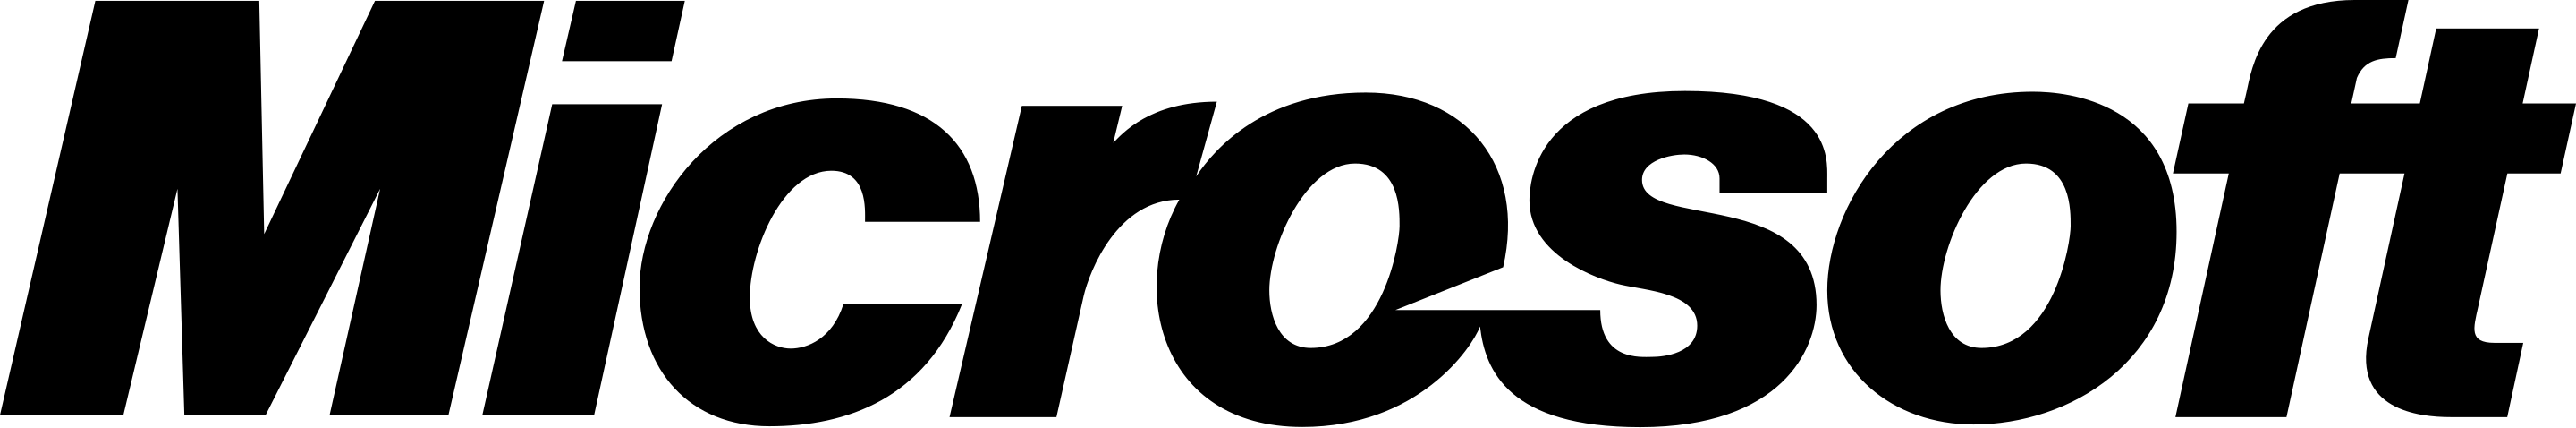 Microsoft logo 1987